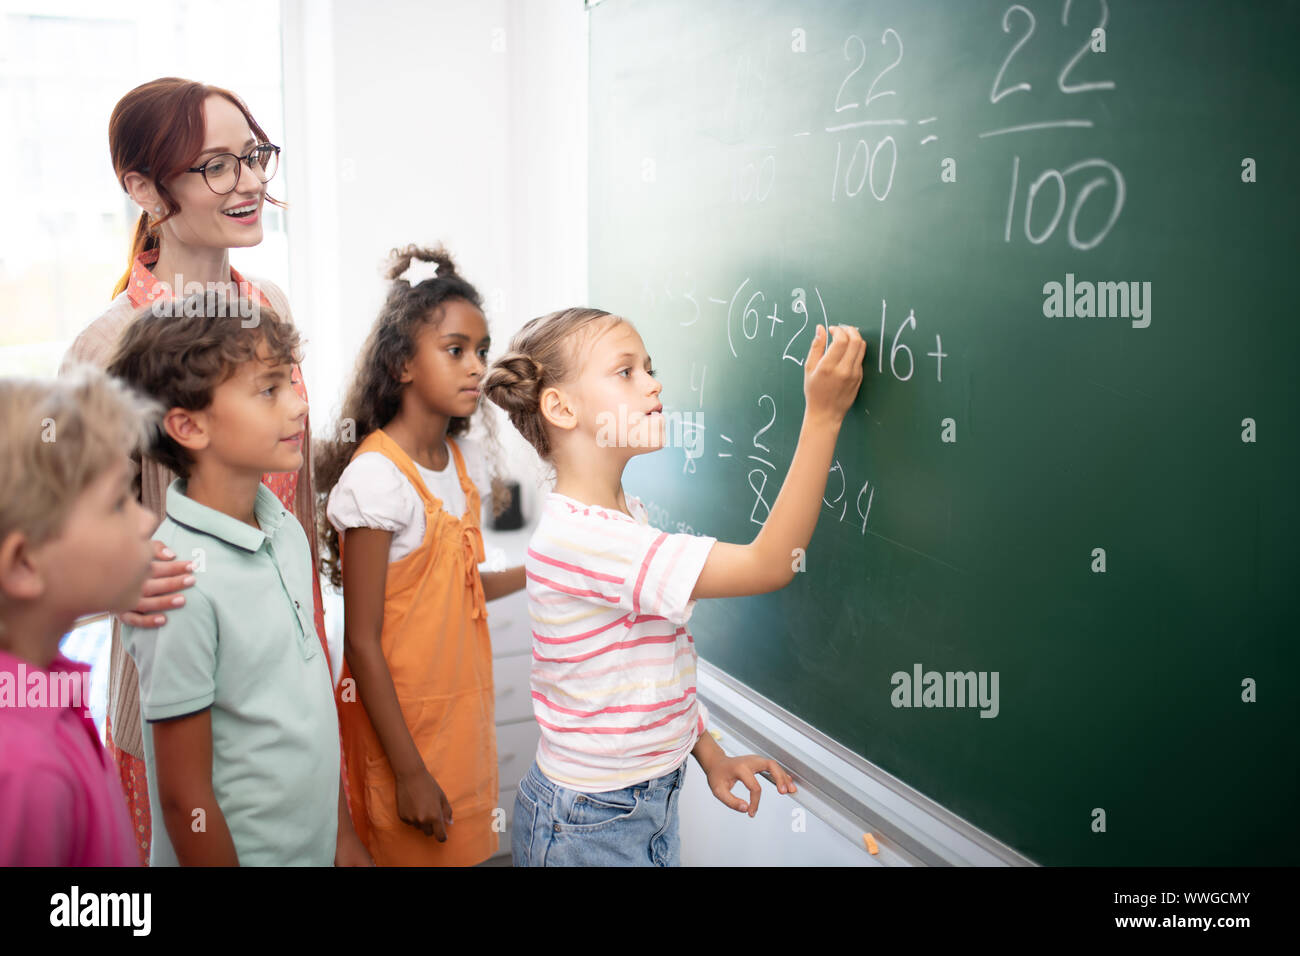 Smart girl writing down numbers on blackboard during math class Stock Photo